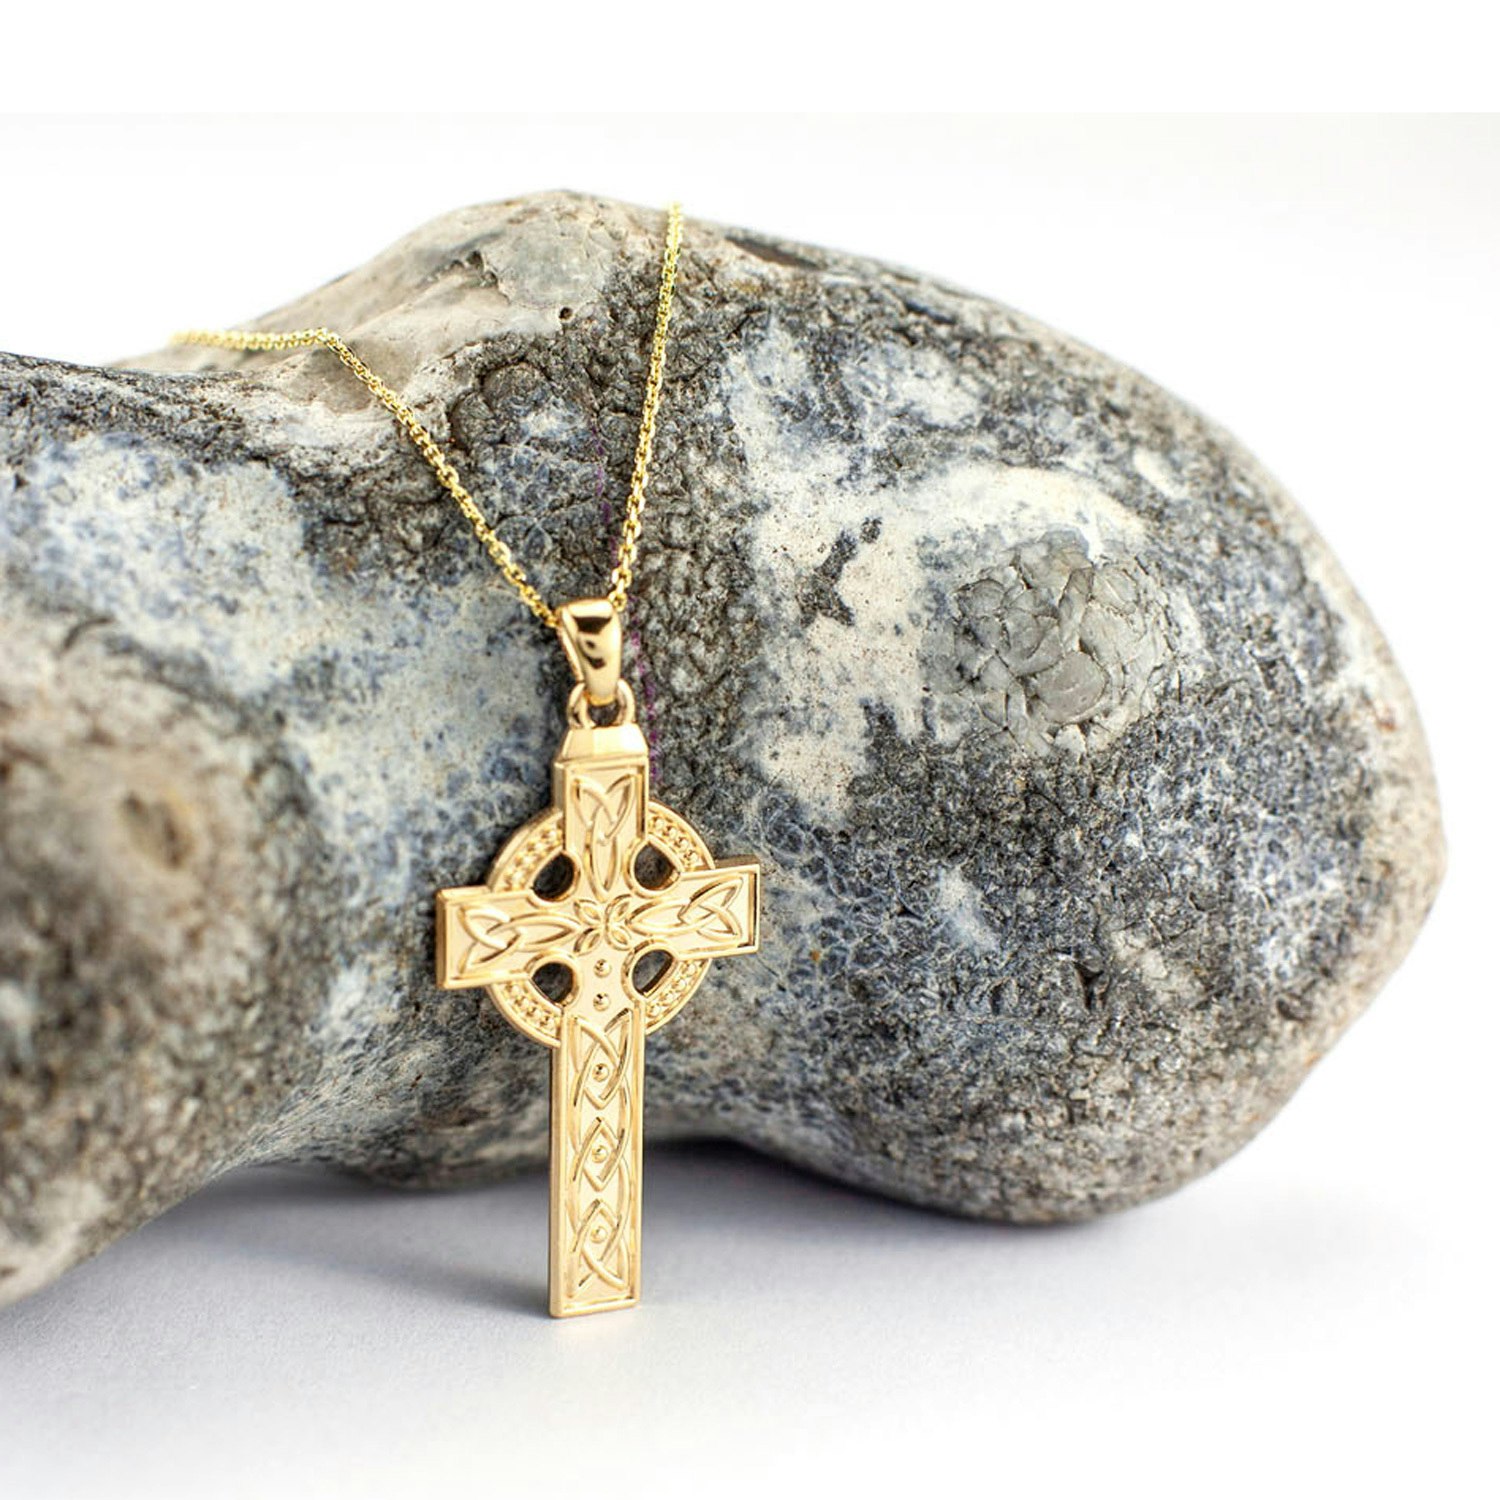 Yellow Gold Diamond Trinity Knot Celtic Cross Pendant Necklace